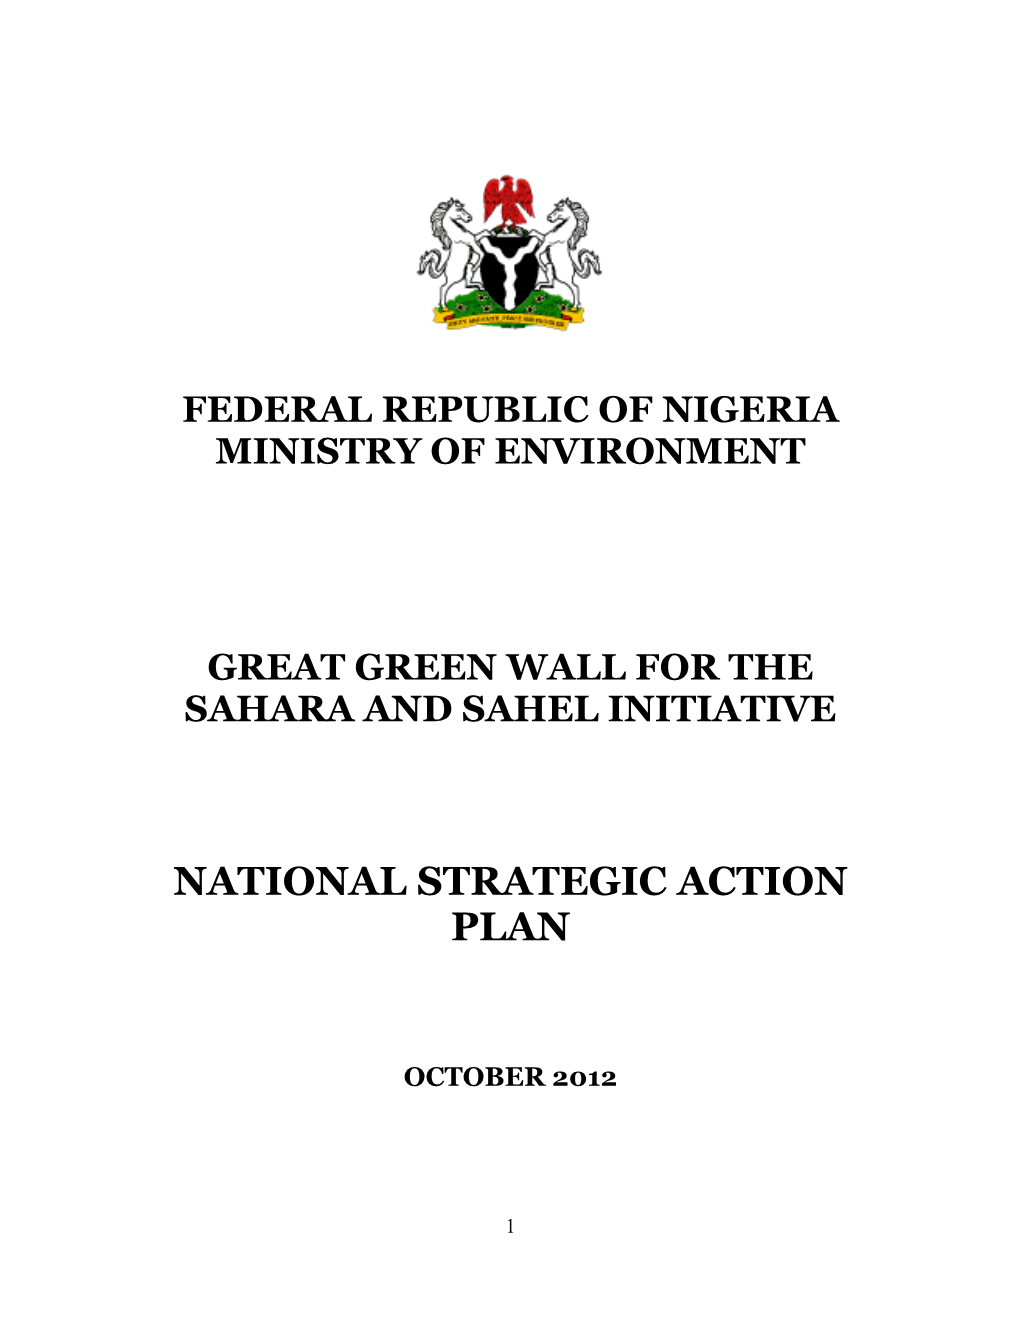 Great Green Wall for the Sahara and Sahel Initiative. National Strategic